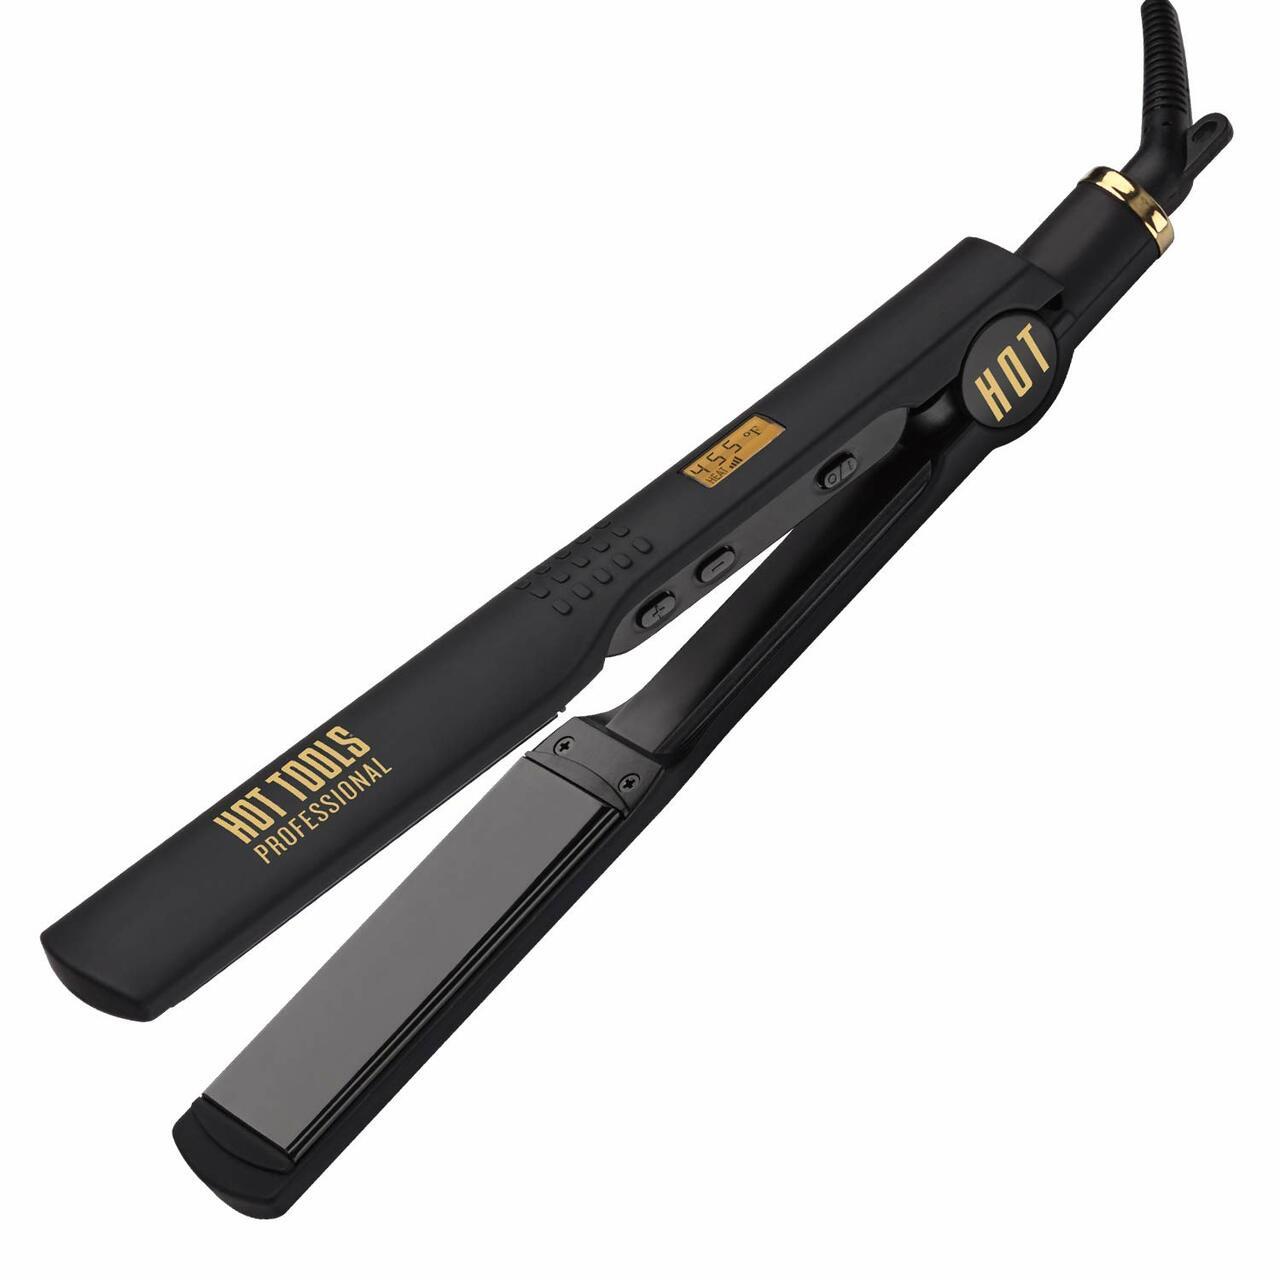 Hot Tools Black Gold 1.25" Digital Salon Flat Iron - $137.84